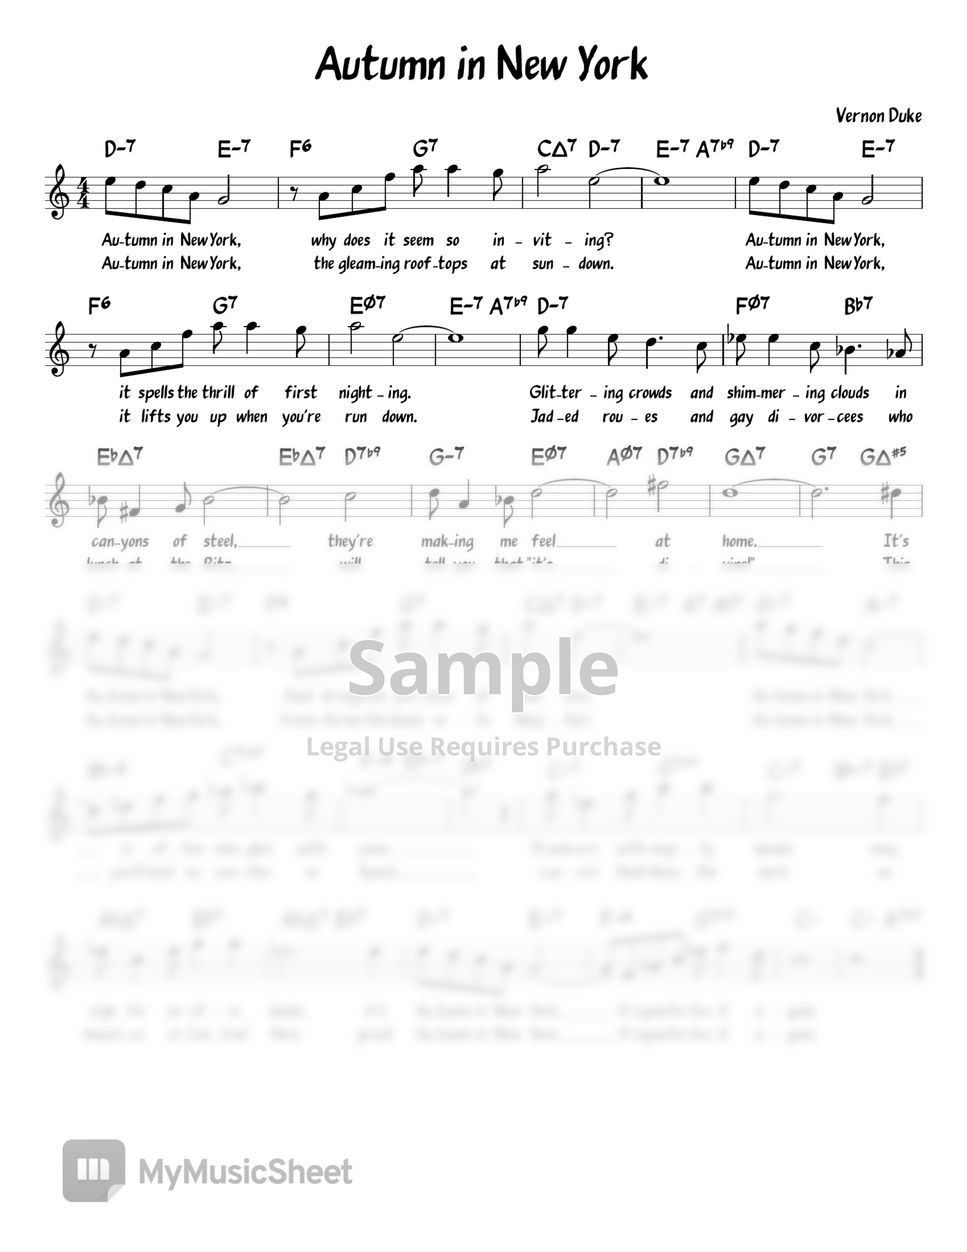 Vernon Duke - Autumn in New York in C (Chord/Melody/Lyrics) (Lead Sheet) by ukulelewenwen